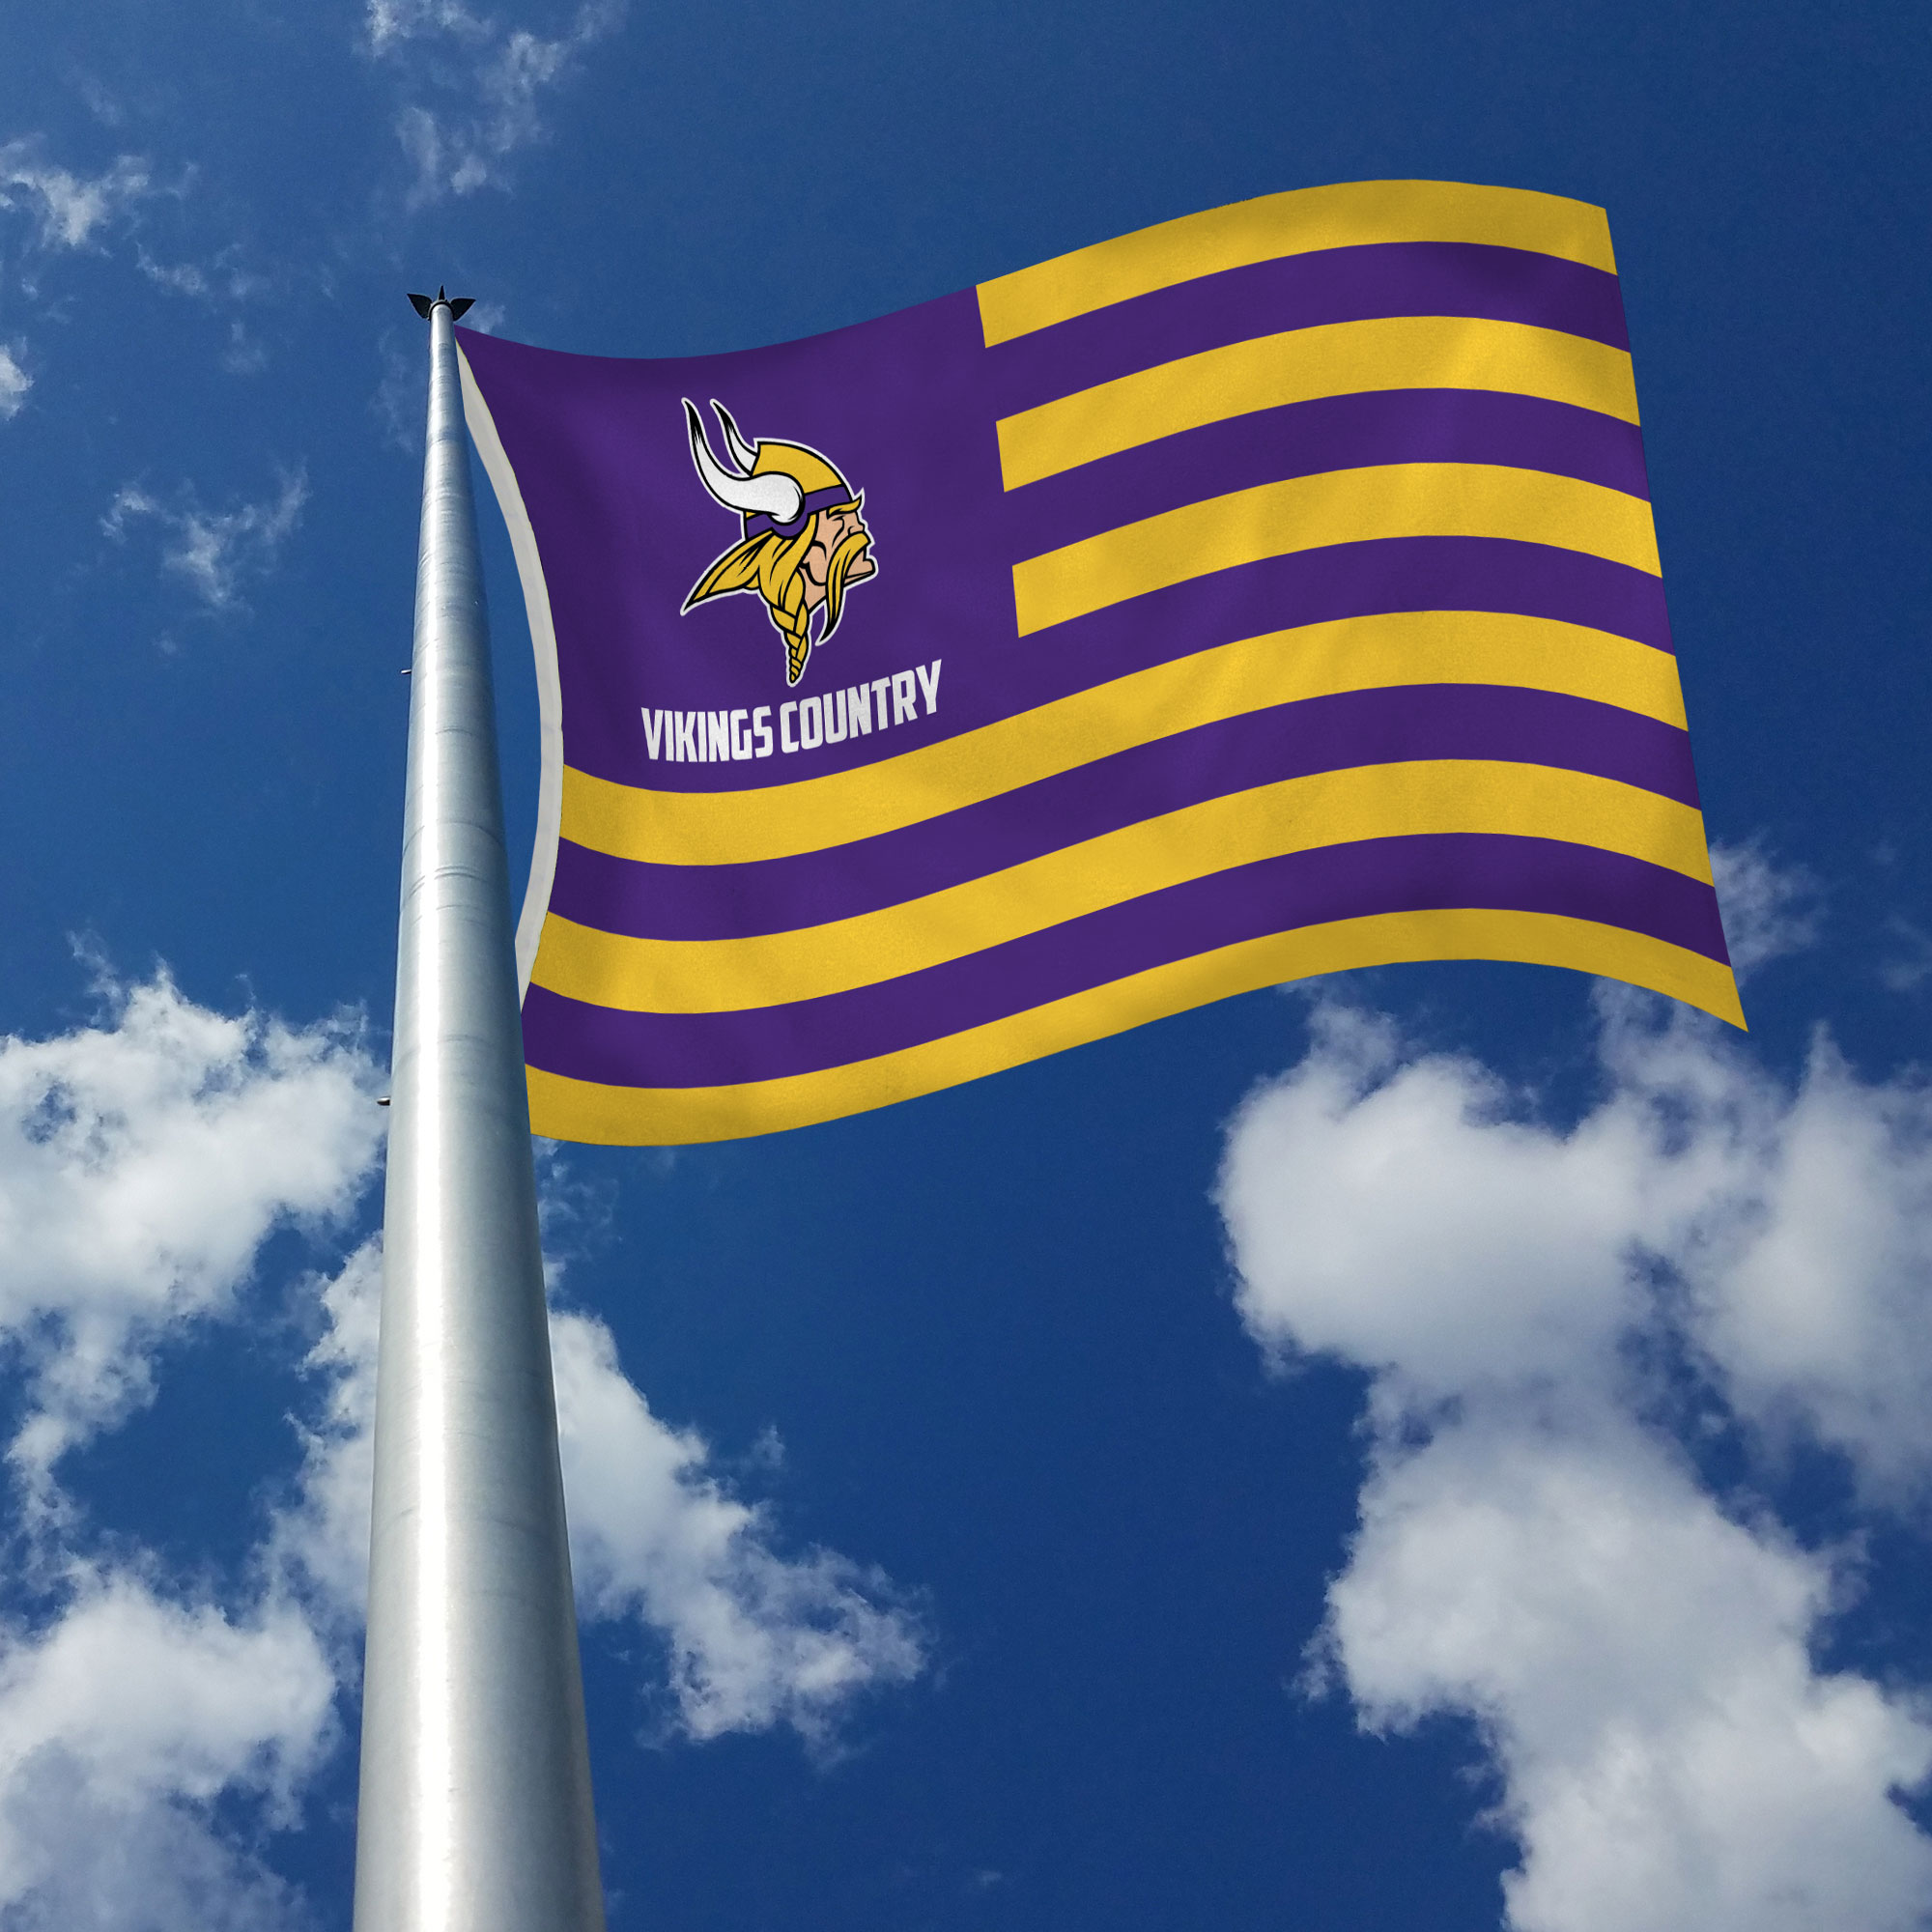 Rico Industries NFL Football Minnesota Vikings Country 3' x 5' Banner Flag